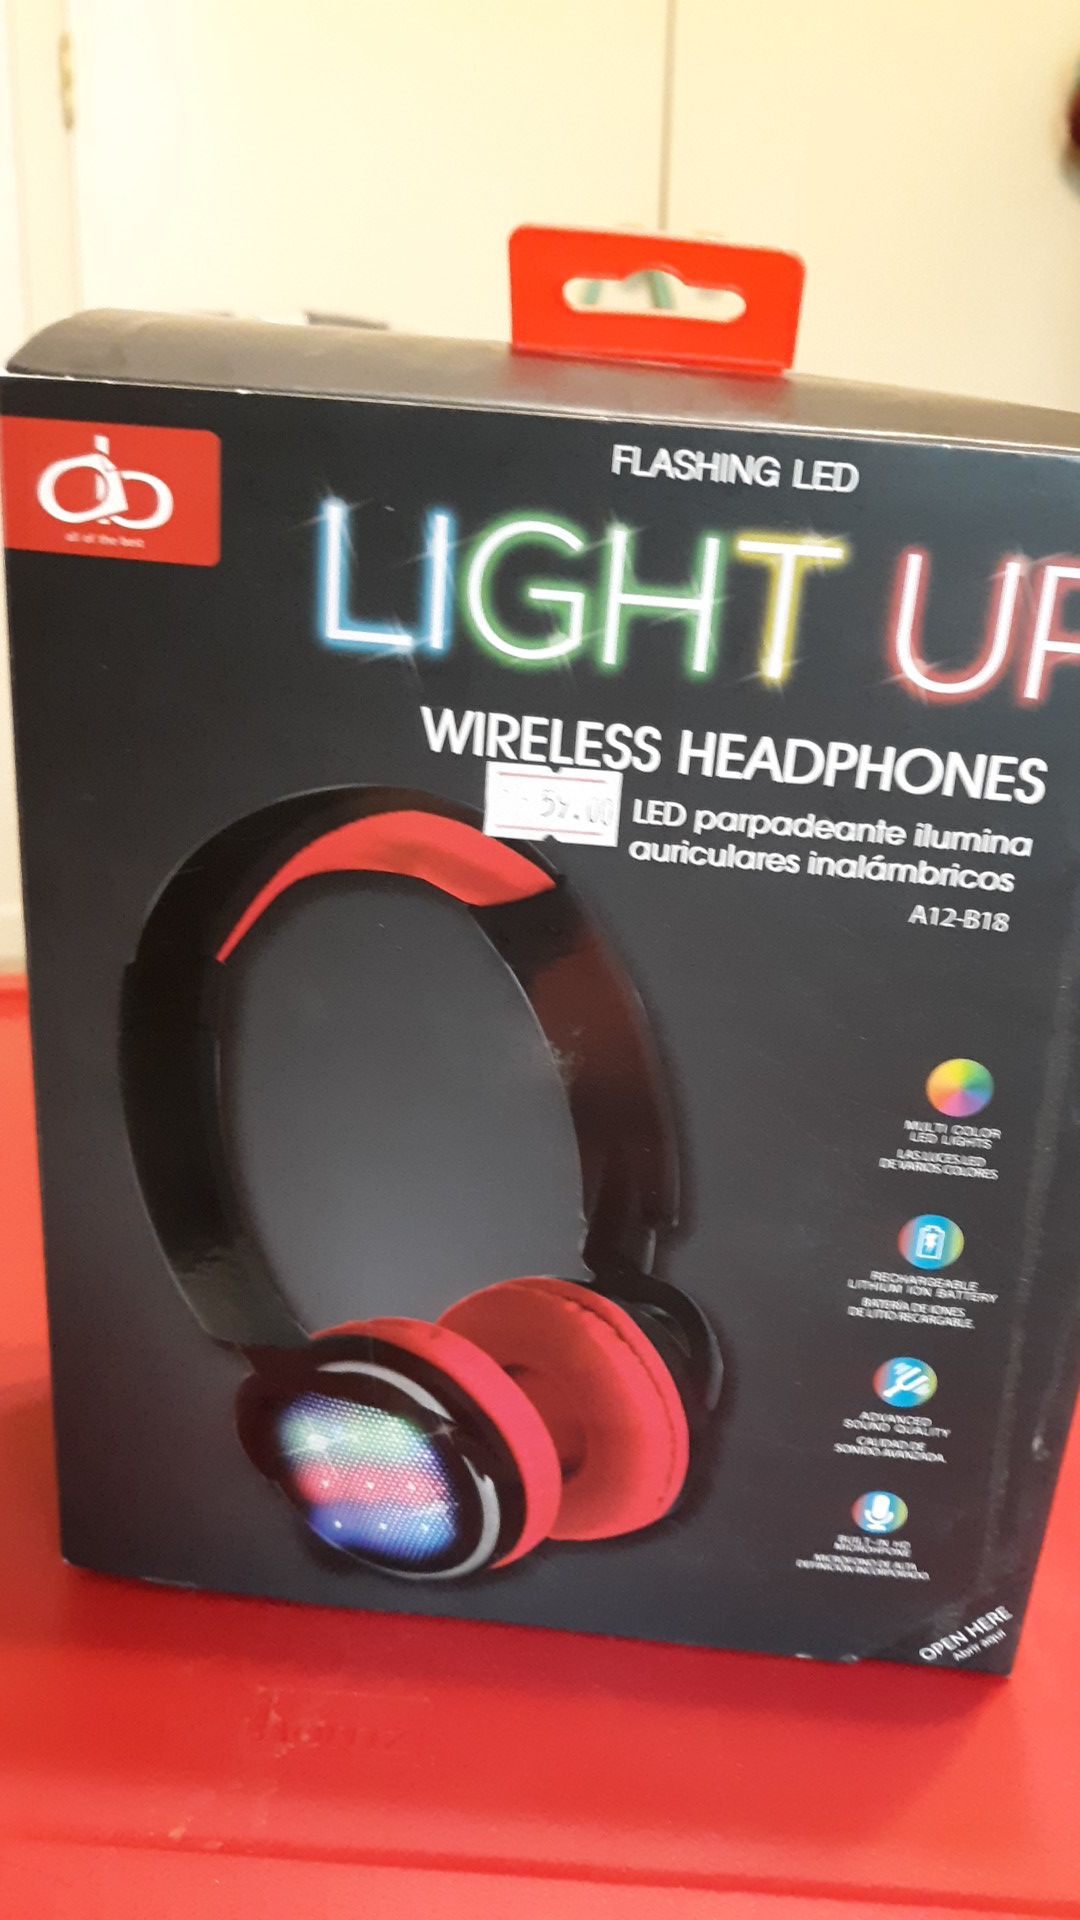 Light up wireless headphones